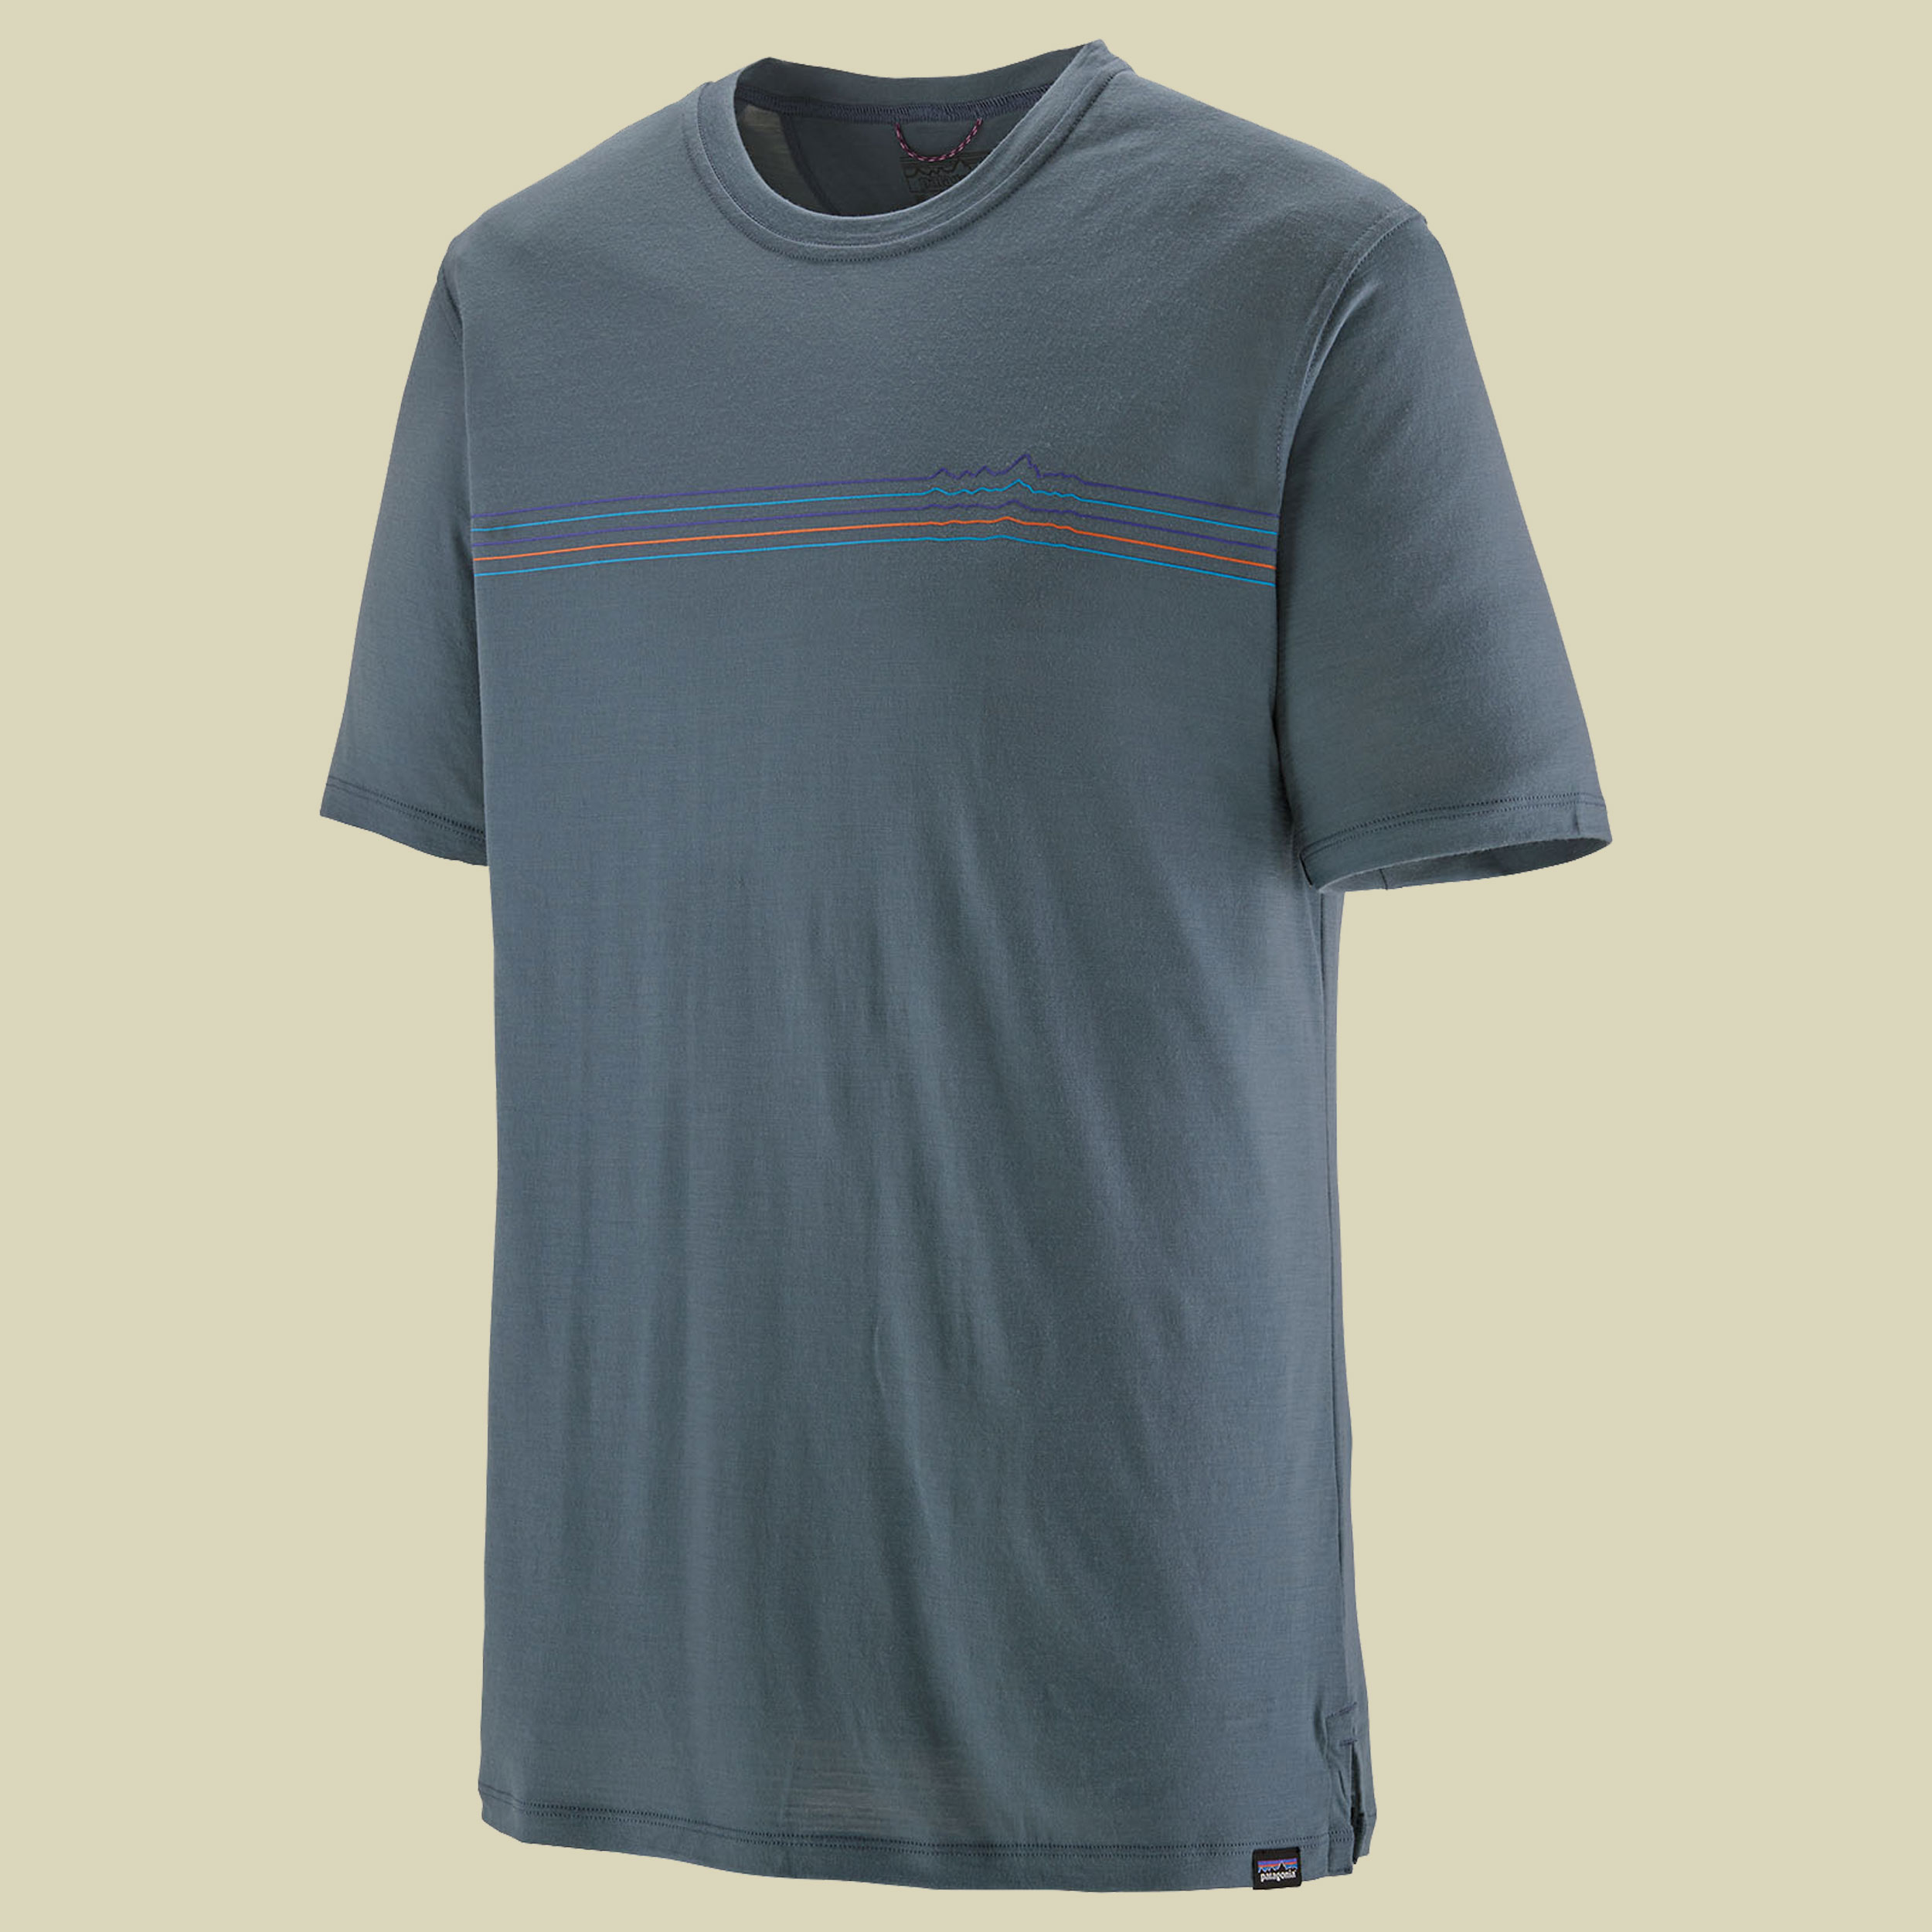 Cap Cool Merino Blend Graphic Shirt Men XL blau - fitz roy fader:utility blue